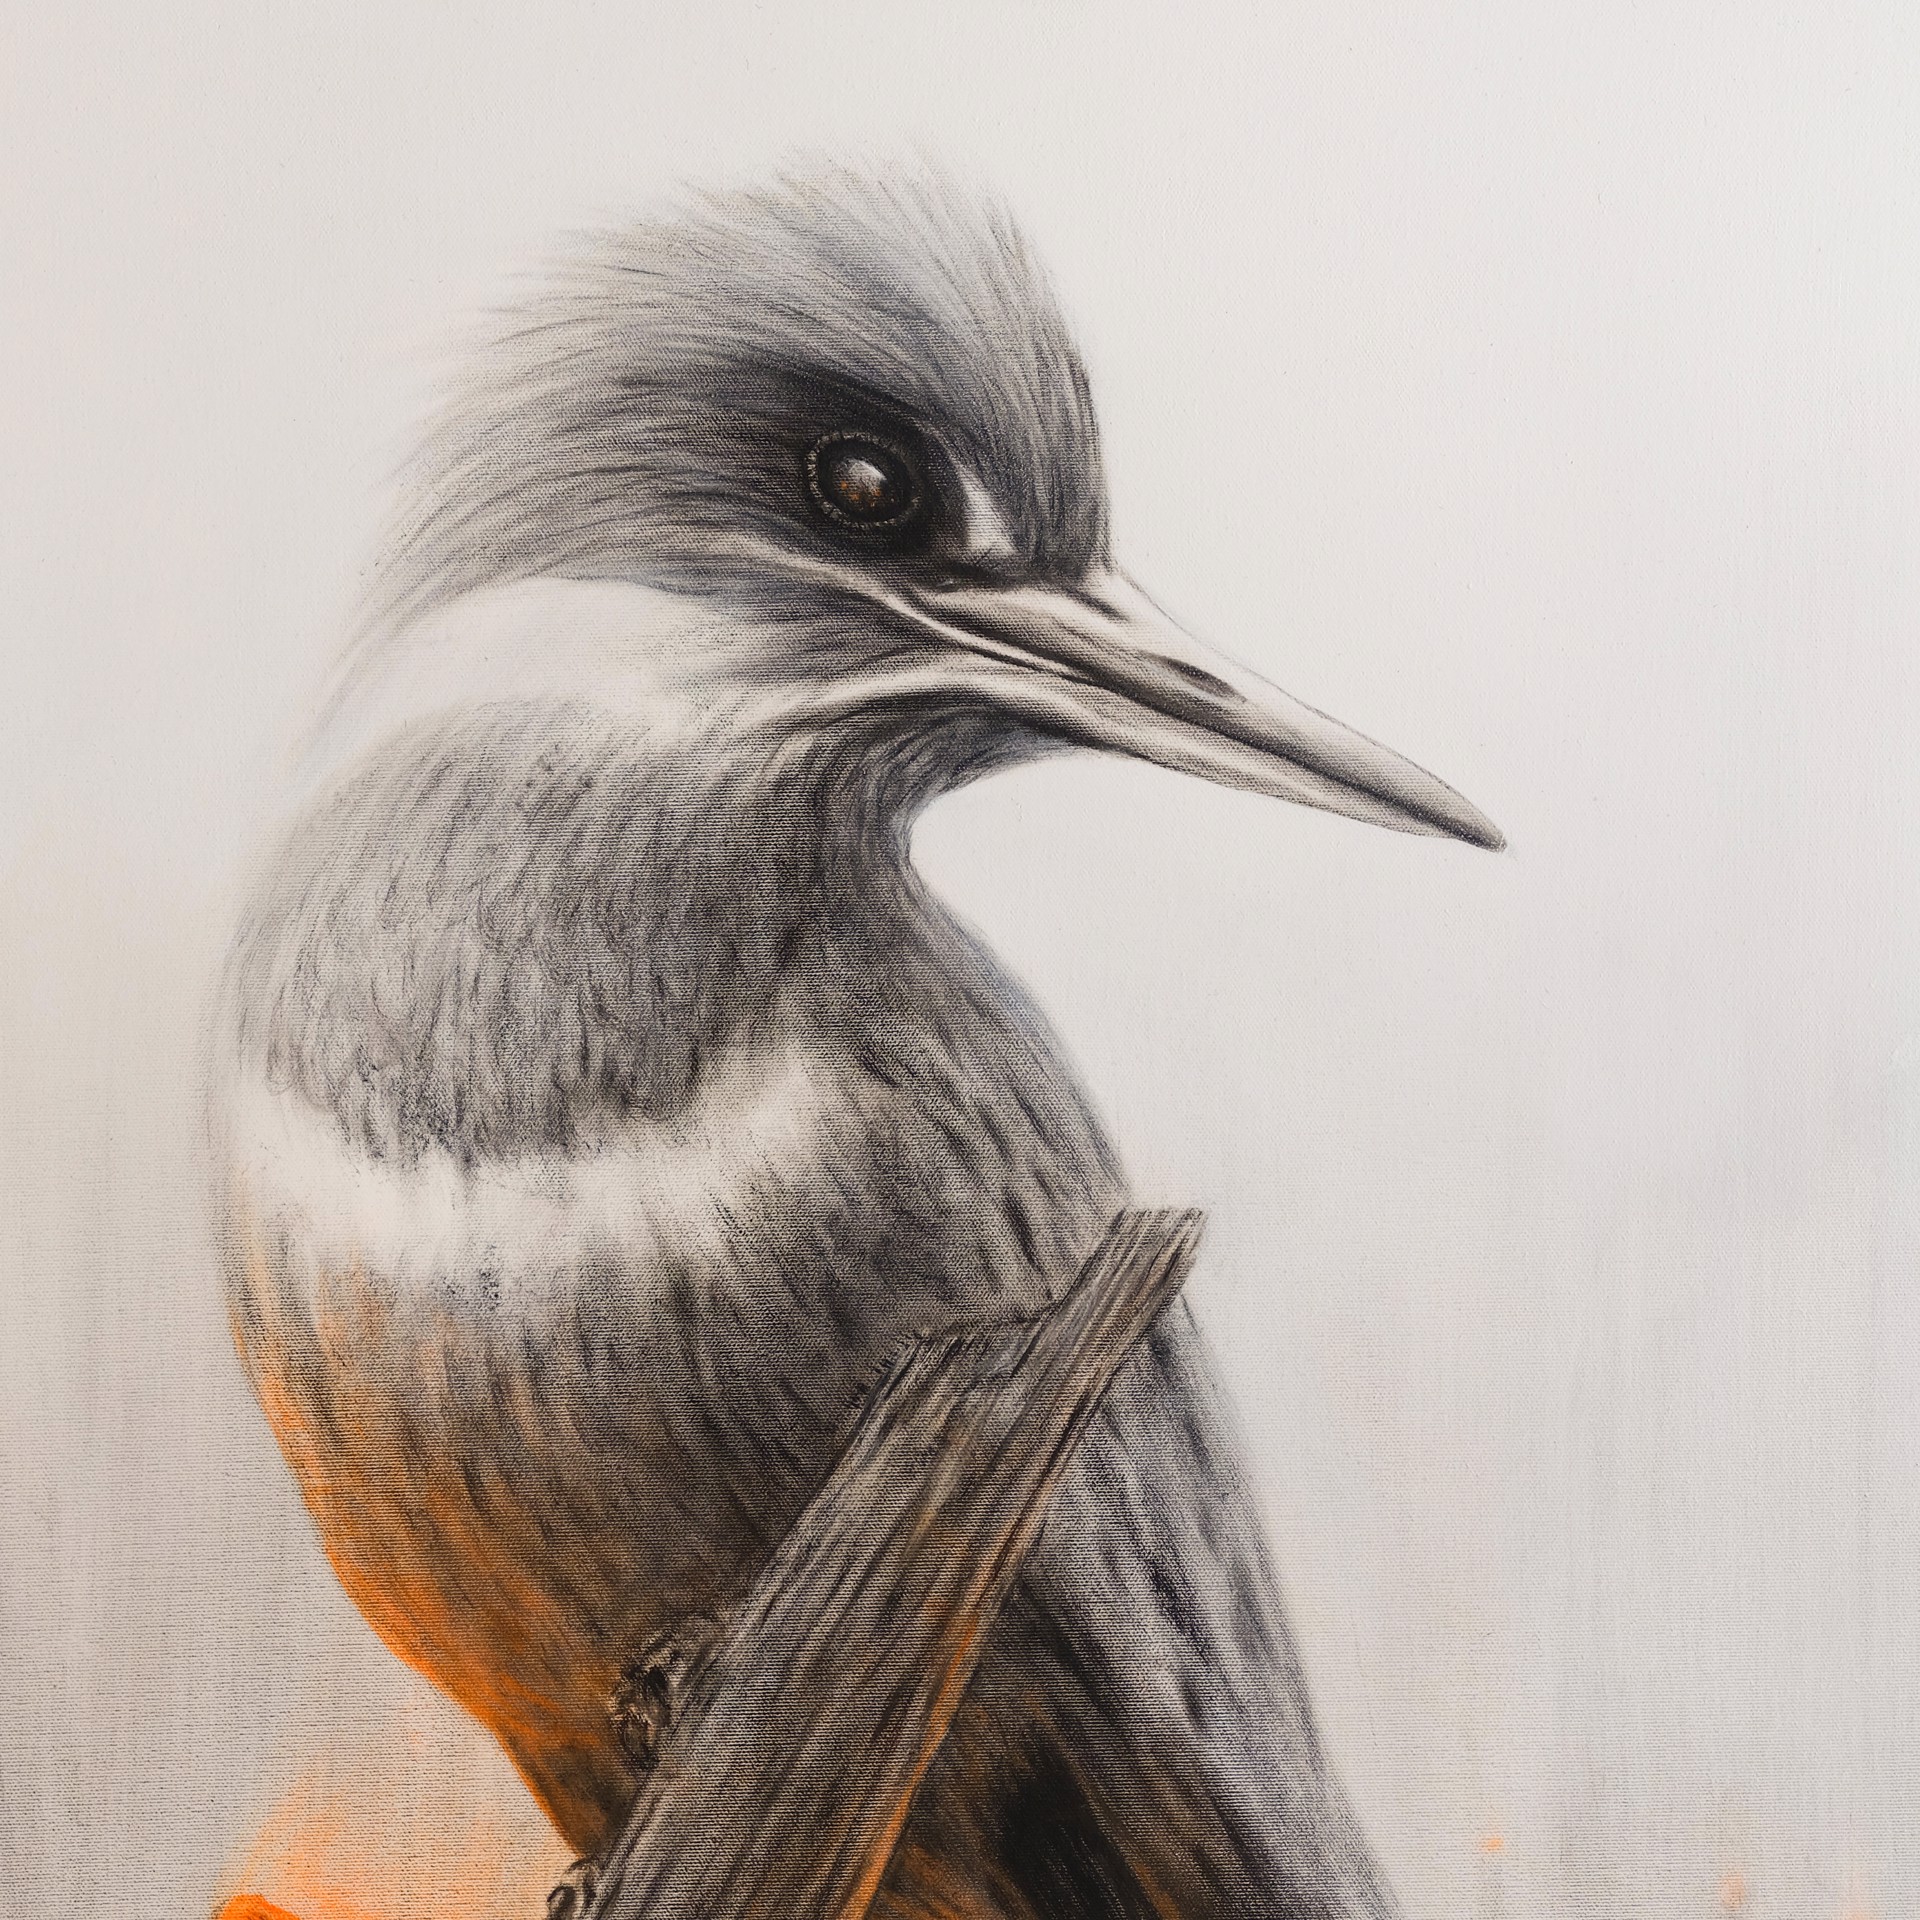 The last Kingfisher by Rubén Carrasco